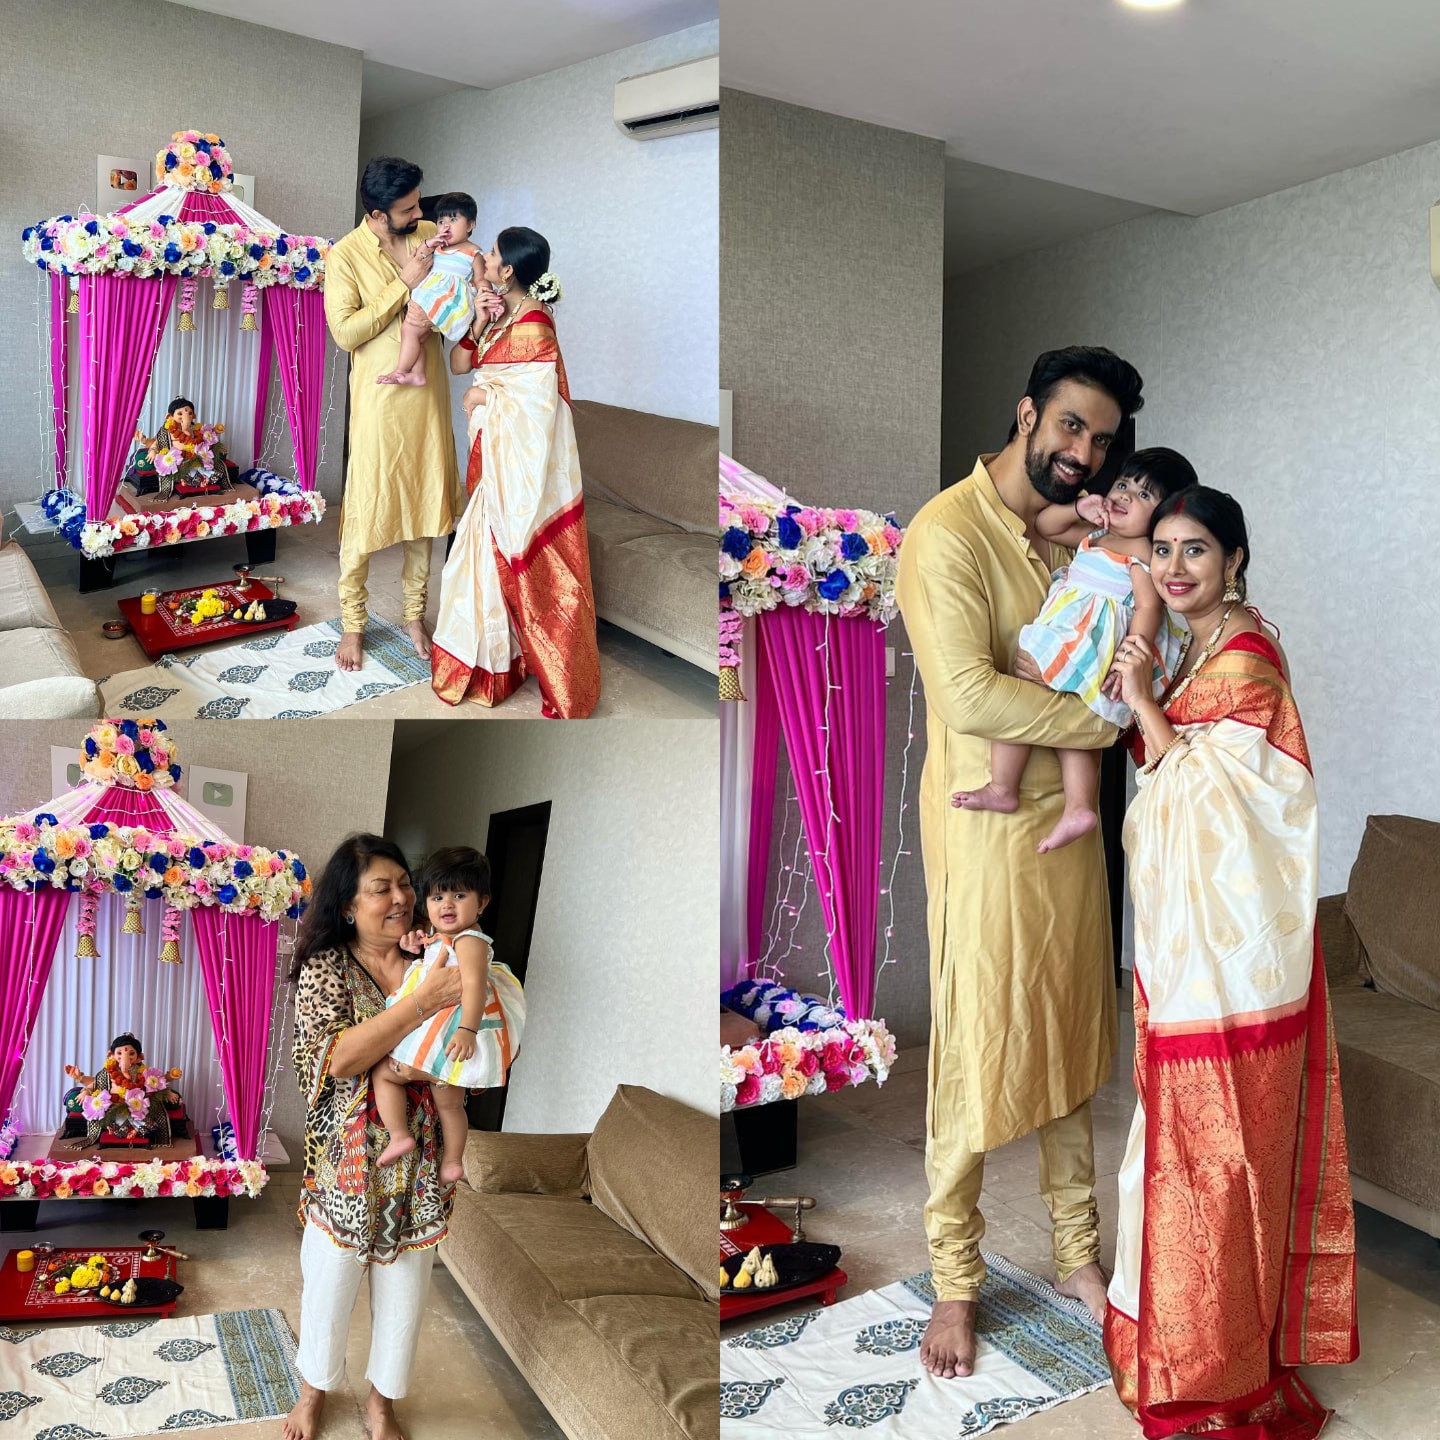 Charu and Rajeev got married in 2019.